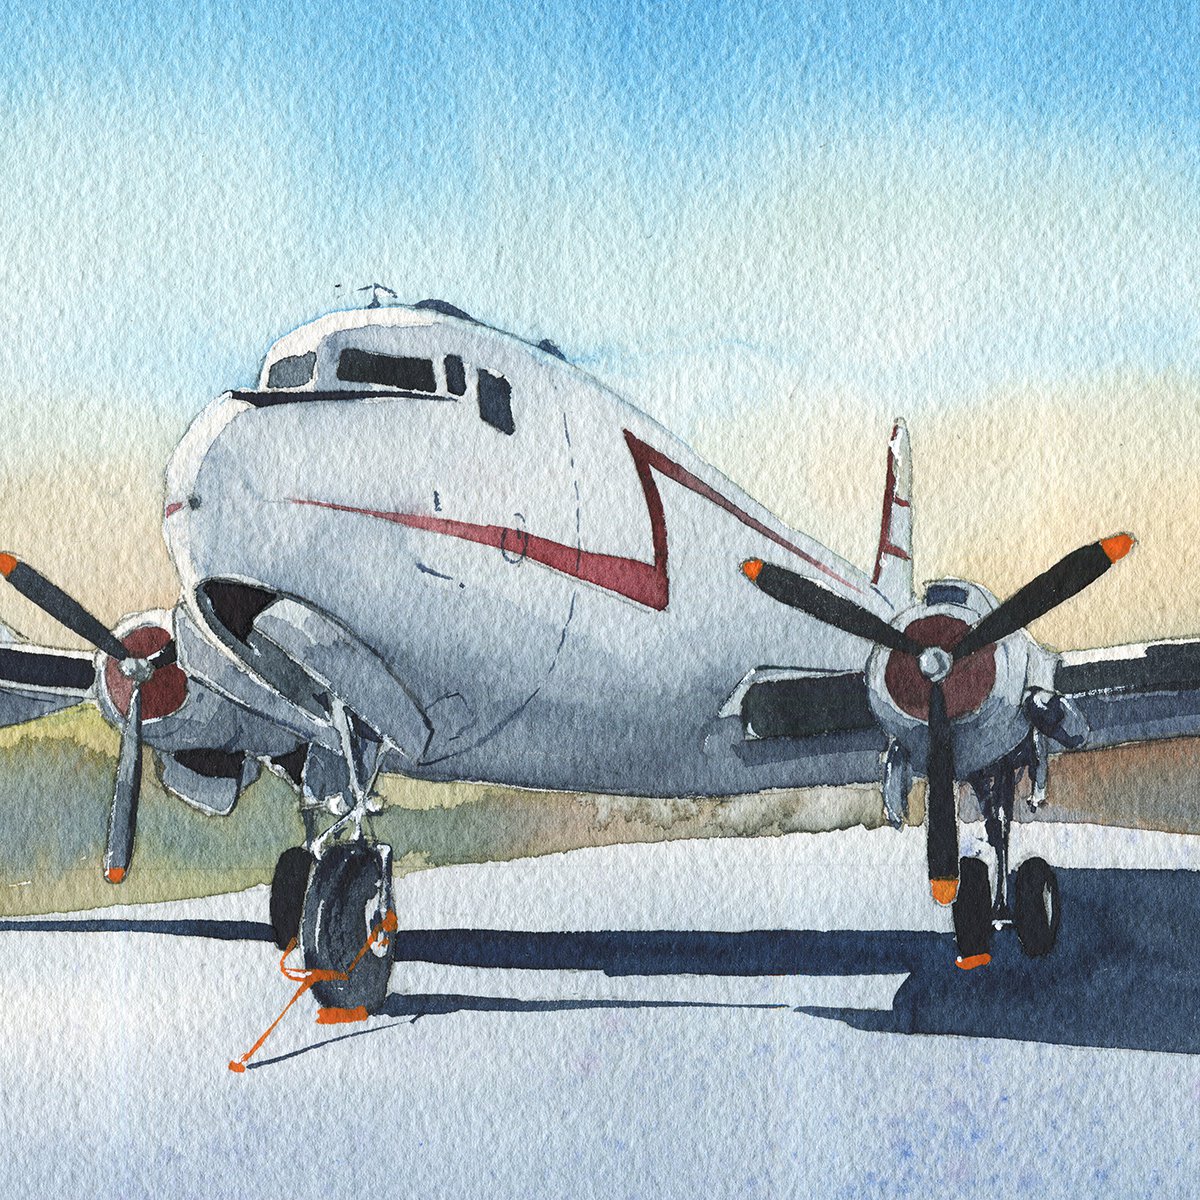 Douglas DC-4 by Oleksii Iakurin